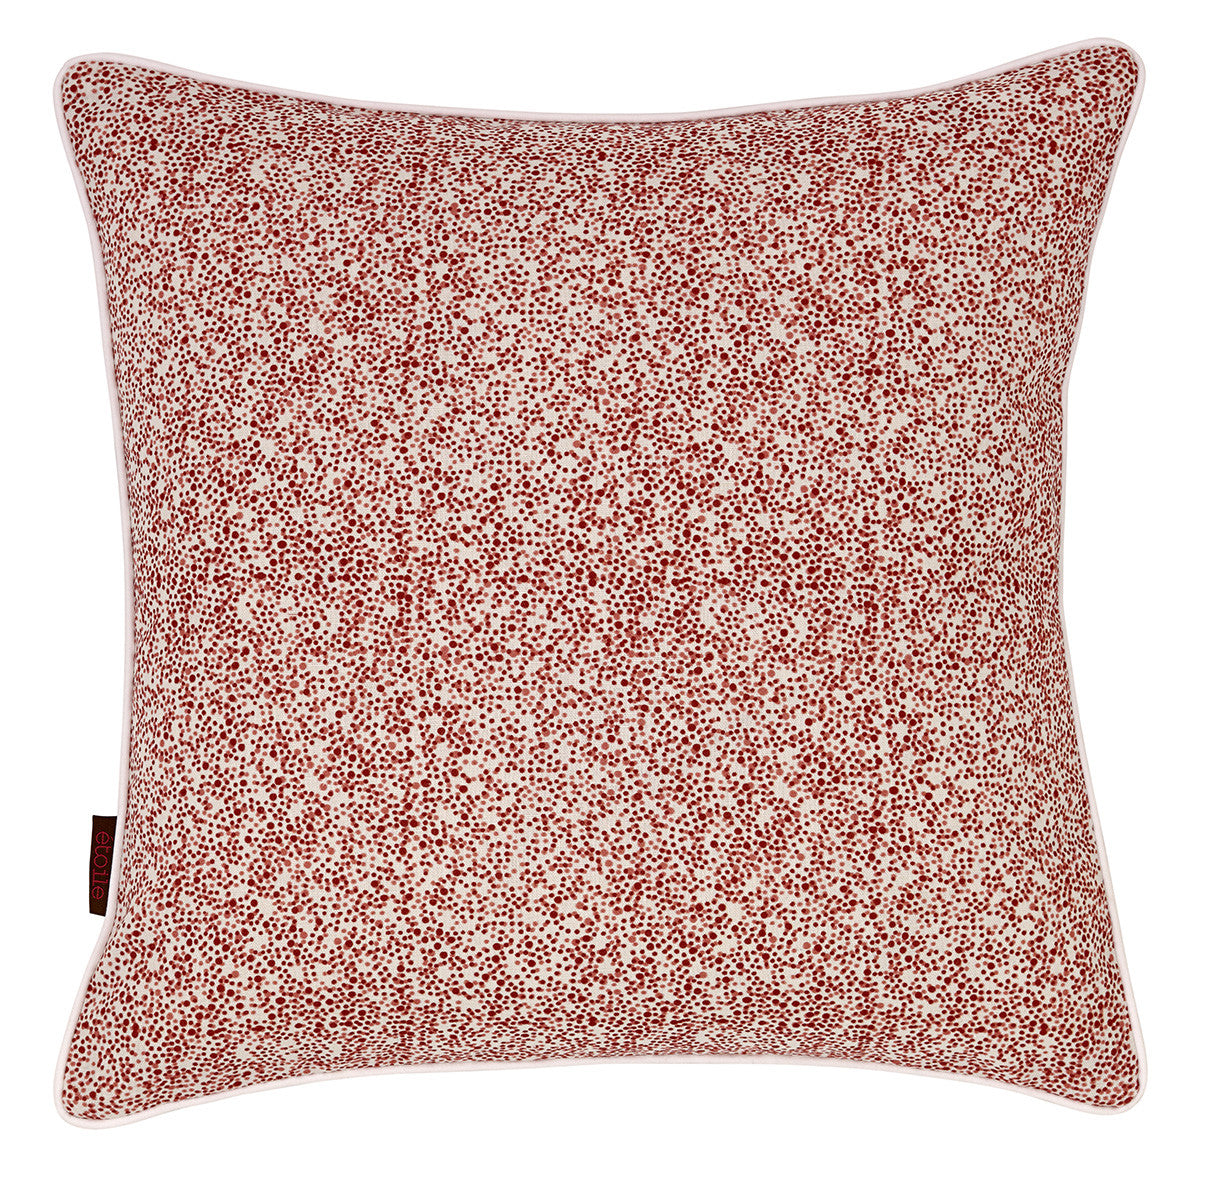 Multicolour Confetti Spots Pattern Linen Union Printed Cushion in Coral Pink & Vermilion Red